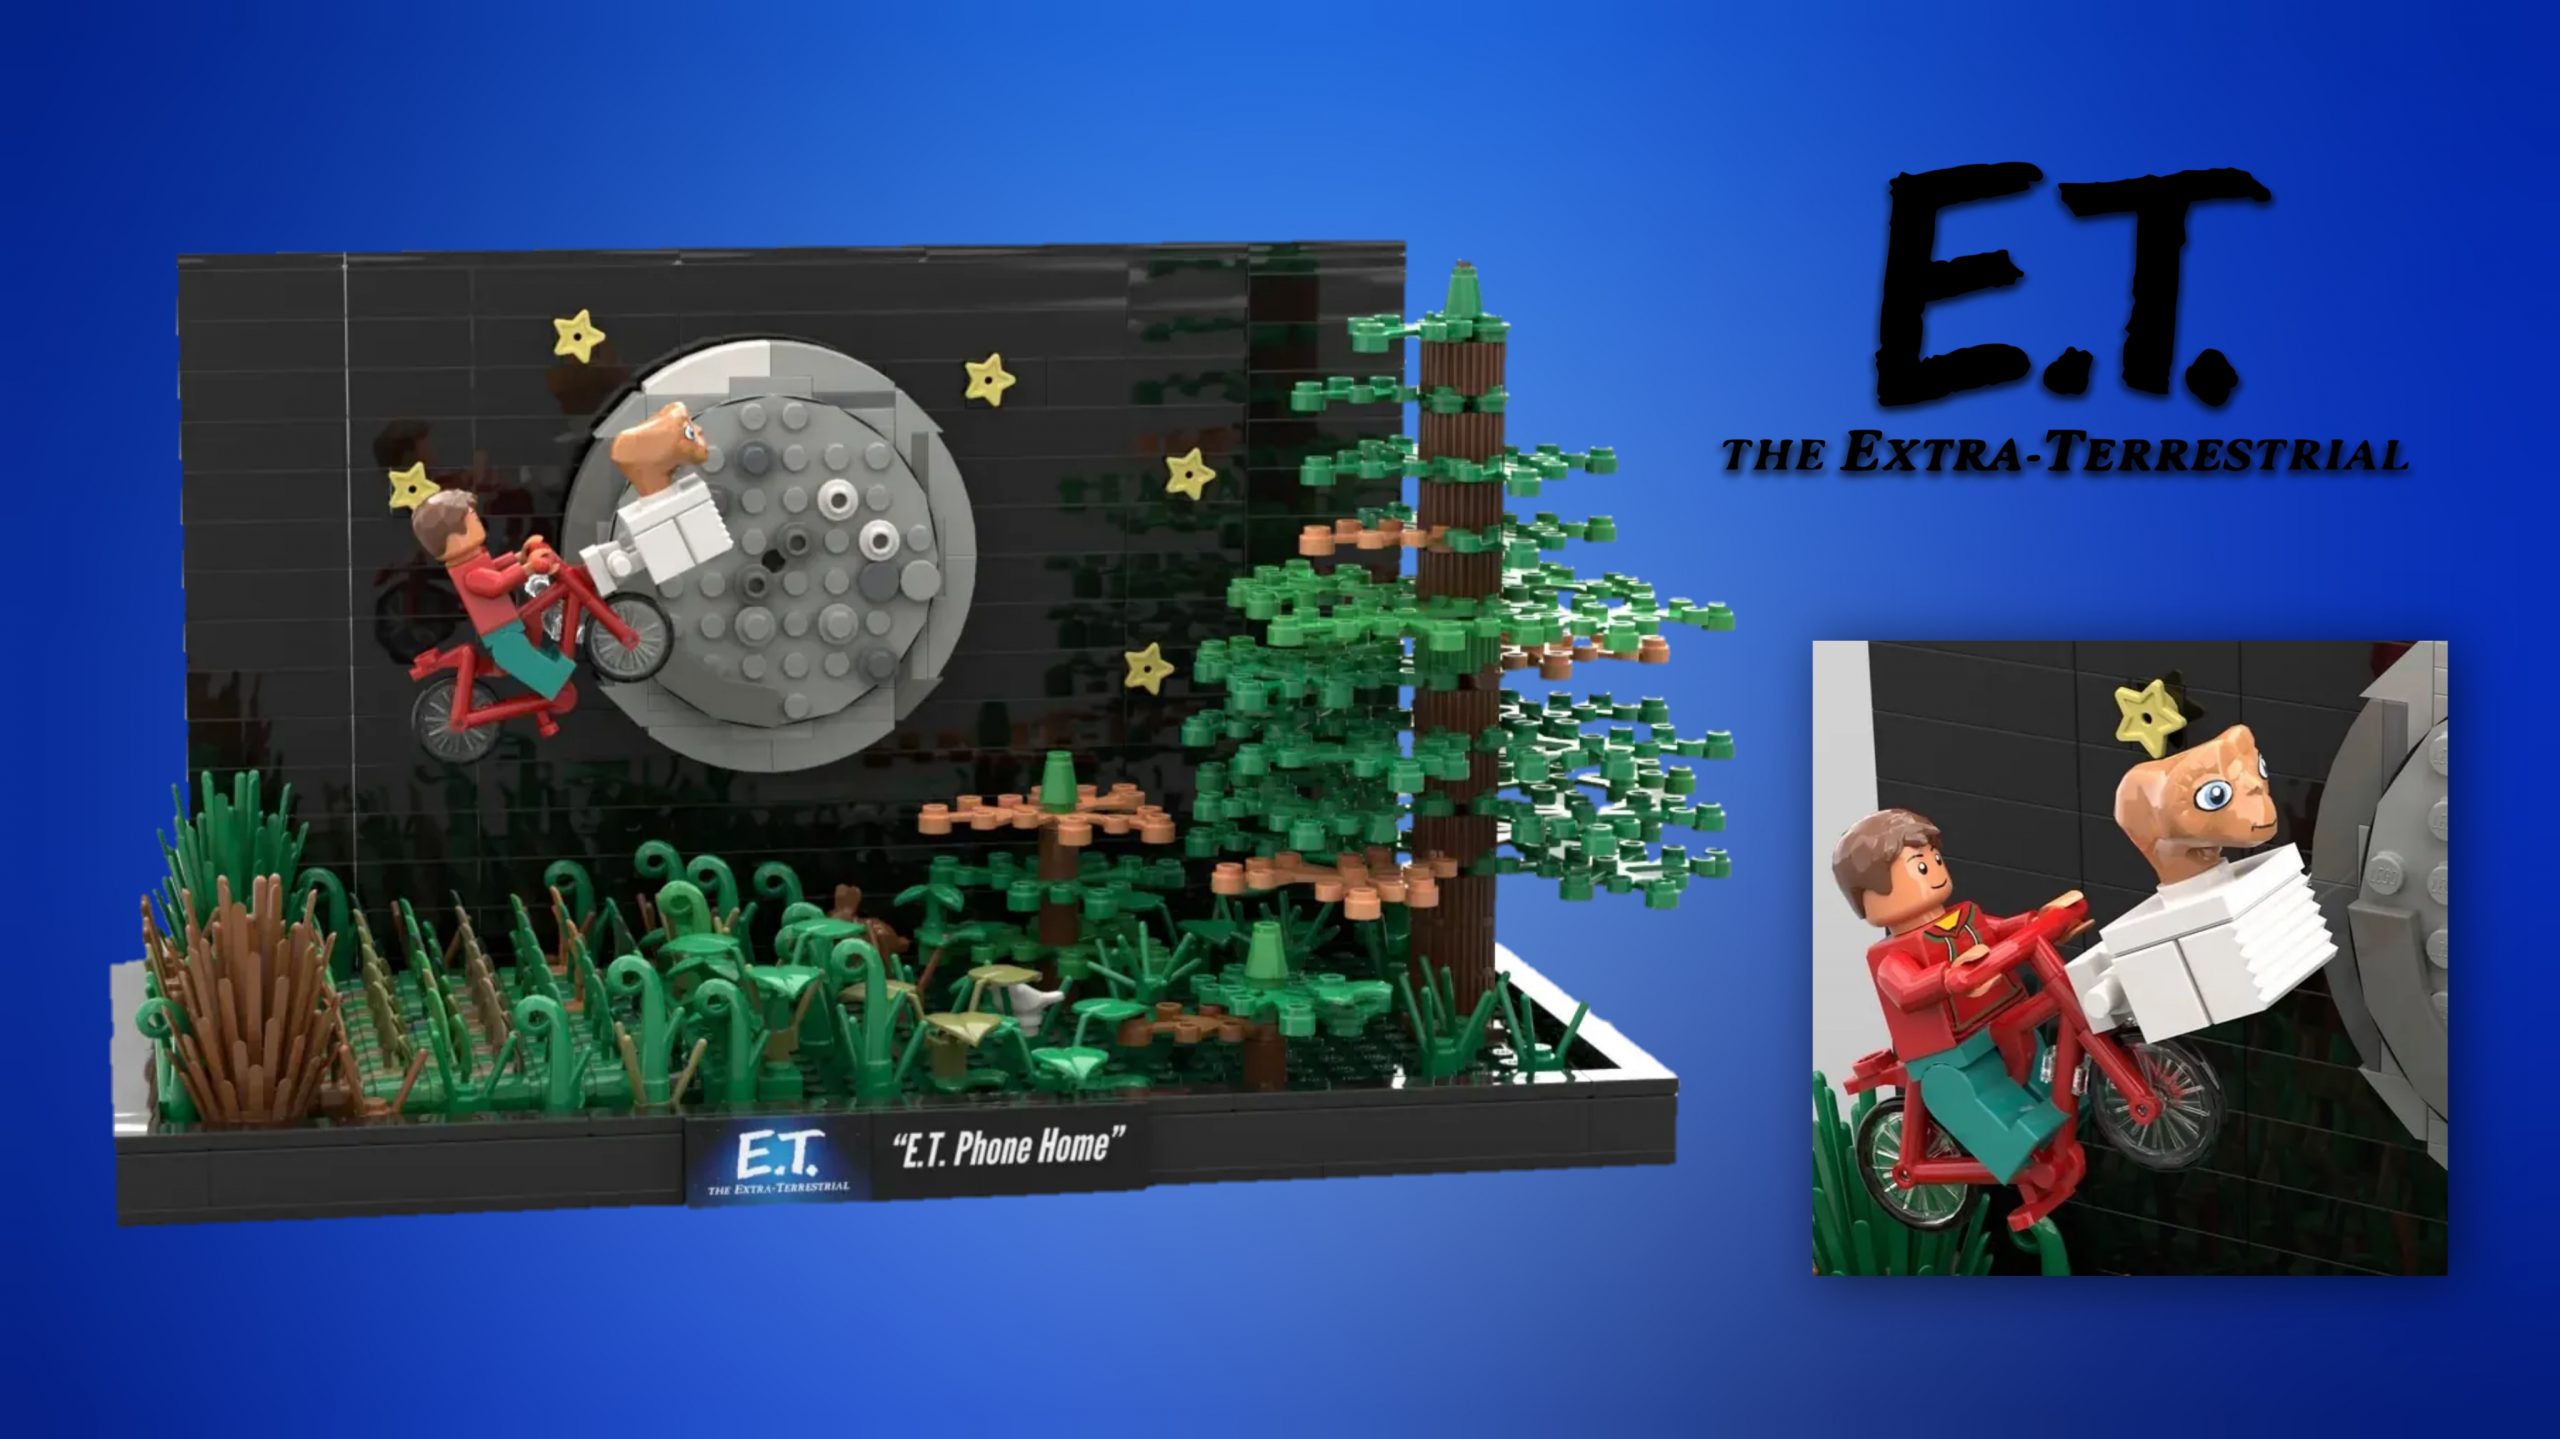 LEGO IDEAS - E.T. The Extra-Terrestrial